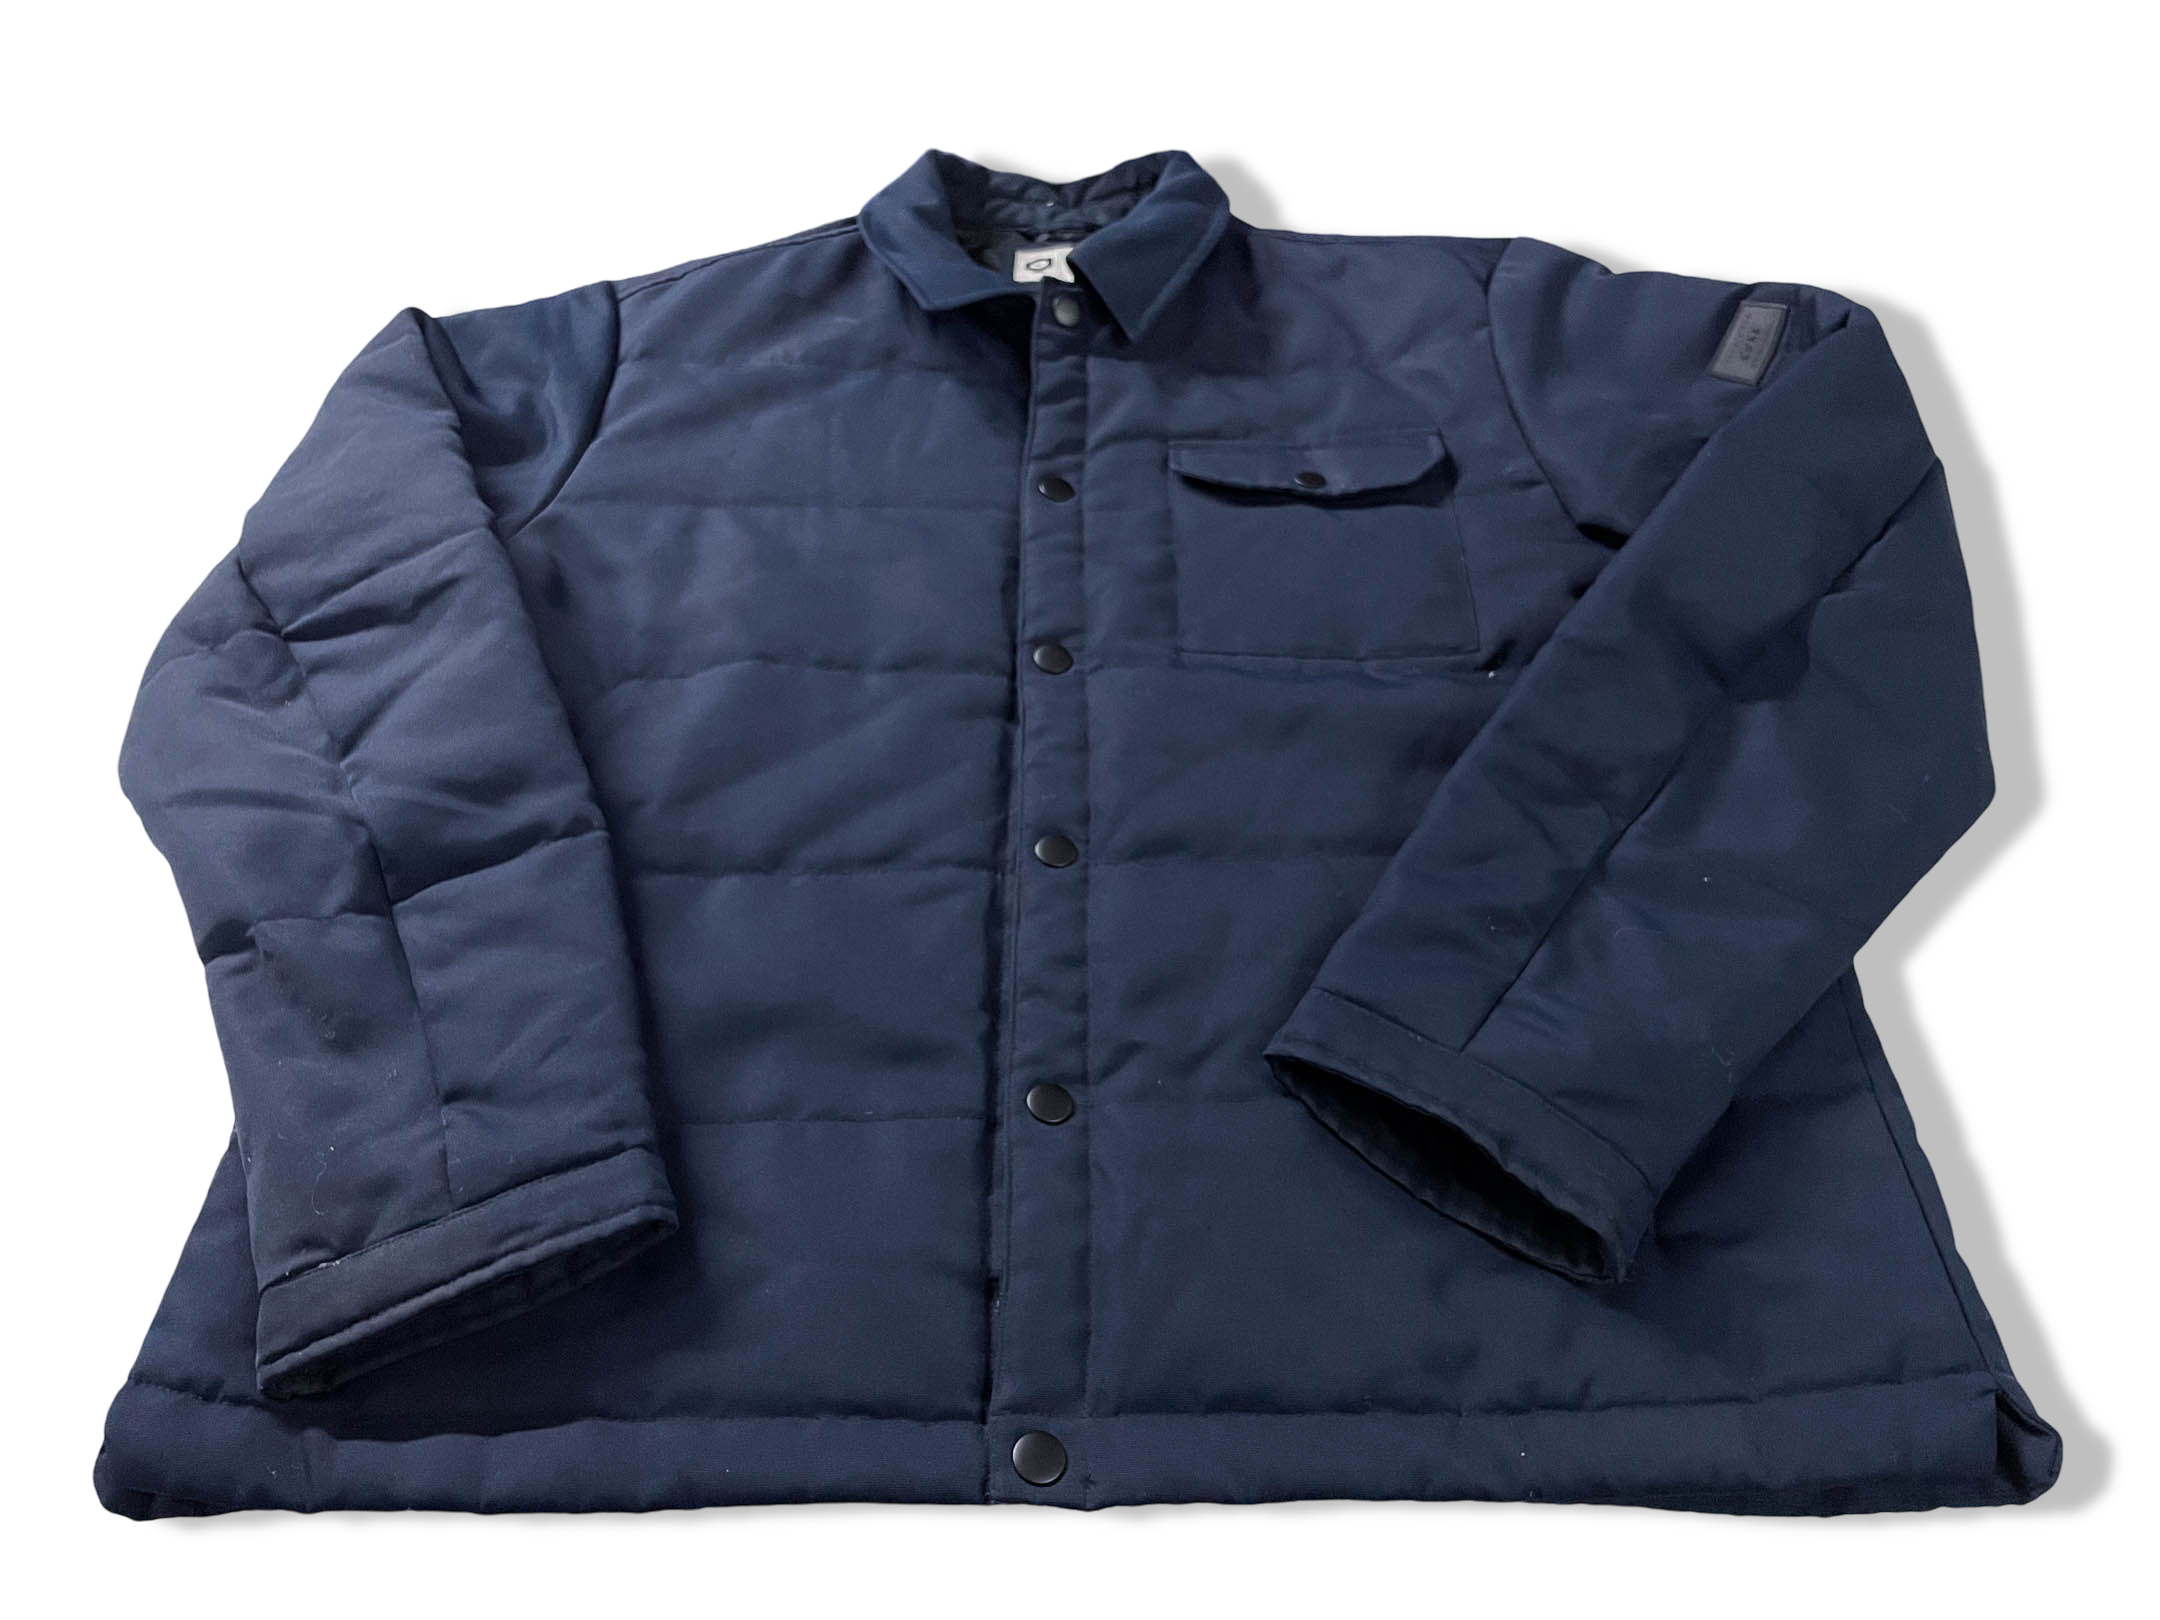 Vintage Men's Jack & jones Navy blue padded quilted jacket in XXL|L31 W23| SKU 4100